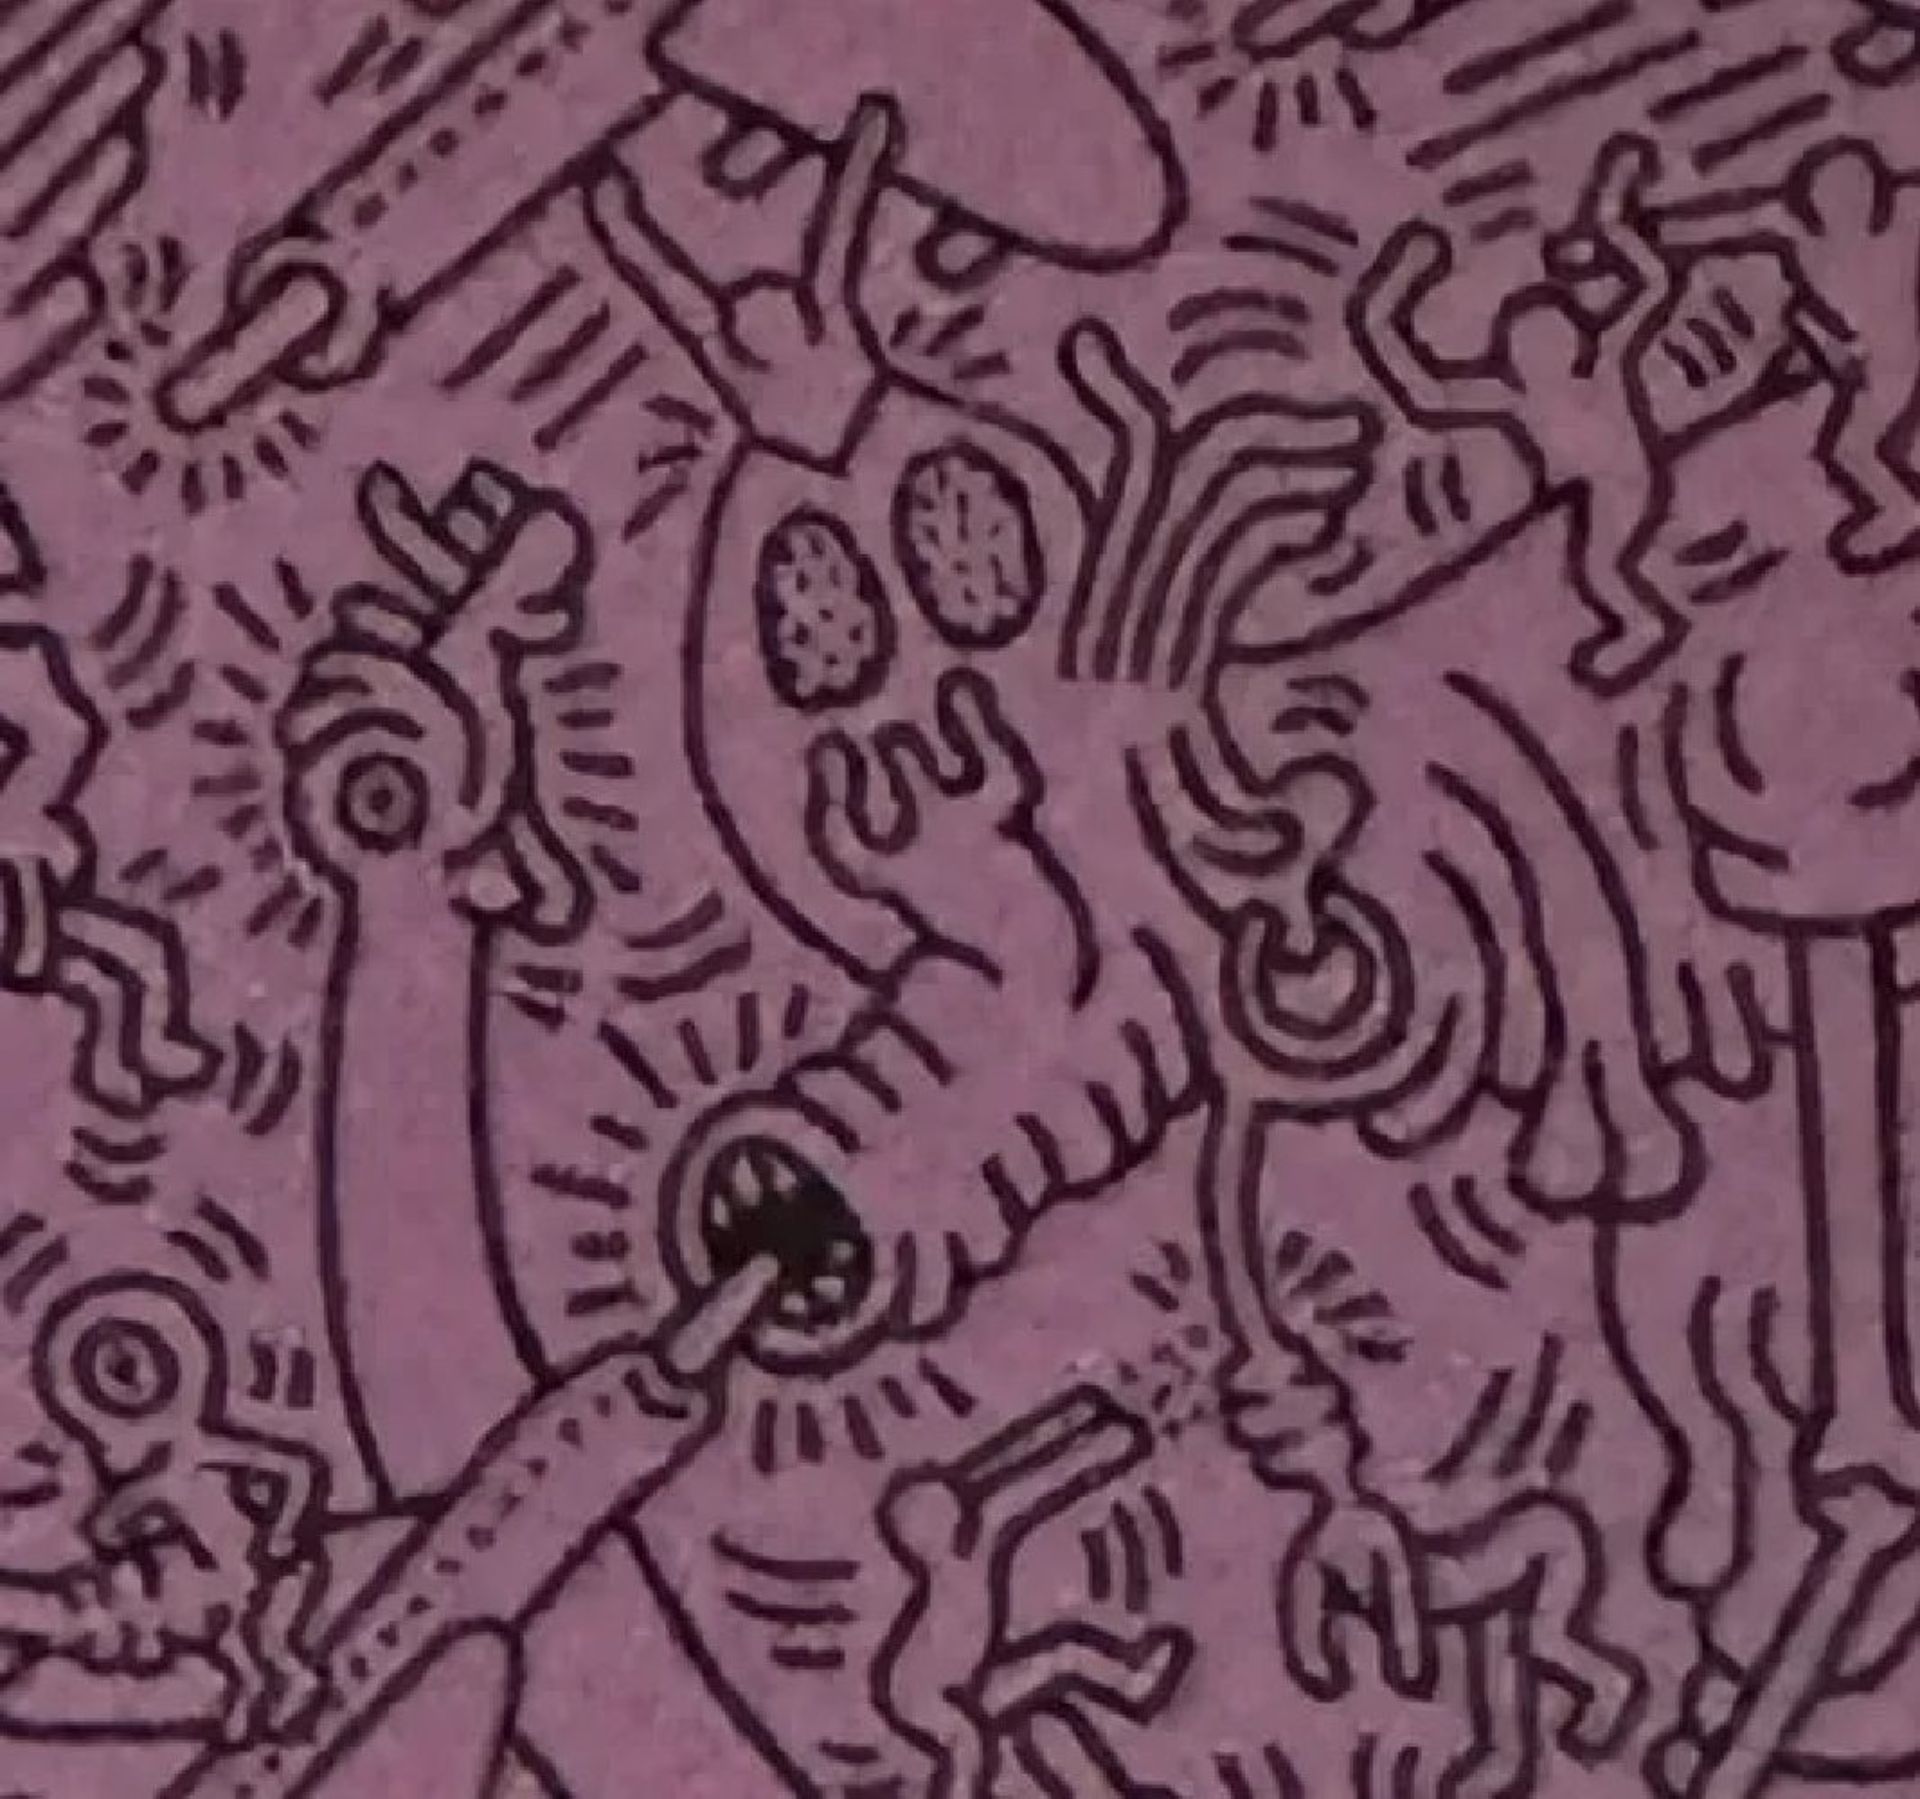 Keith Haring "Untitled" Print. - Bild 3 aus 6